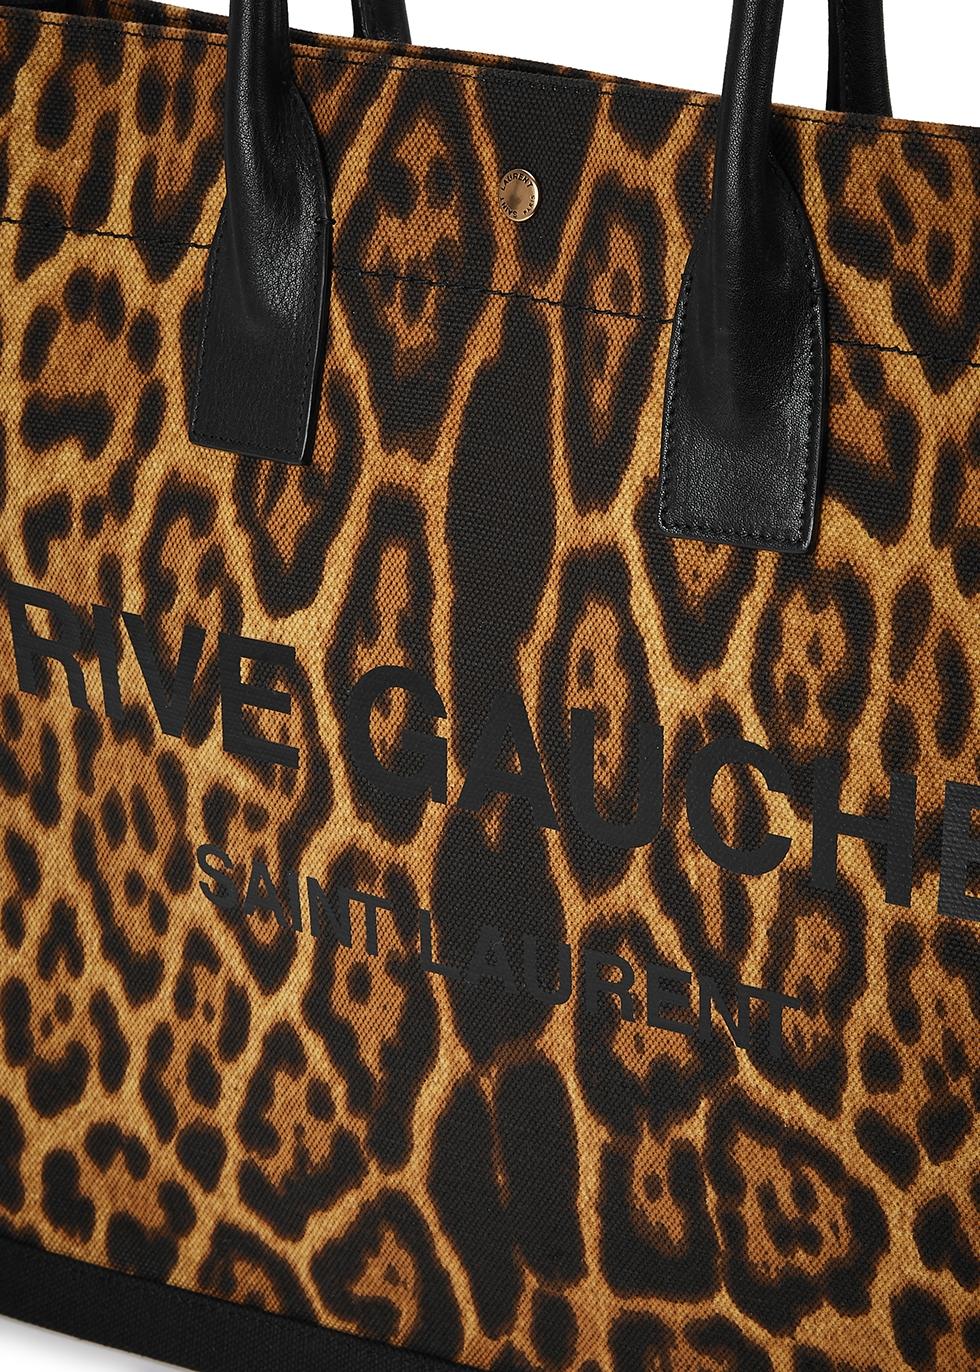 Saint Laurent - Authenticated Cabas Rive Gauche Handbag - Leather Black Leopard for Women, Never Worn, with Tag